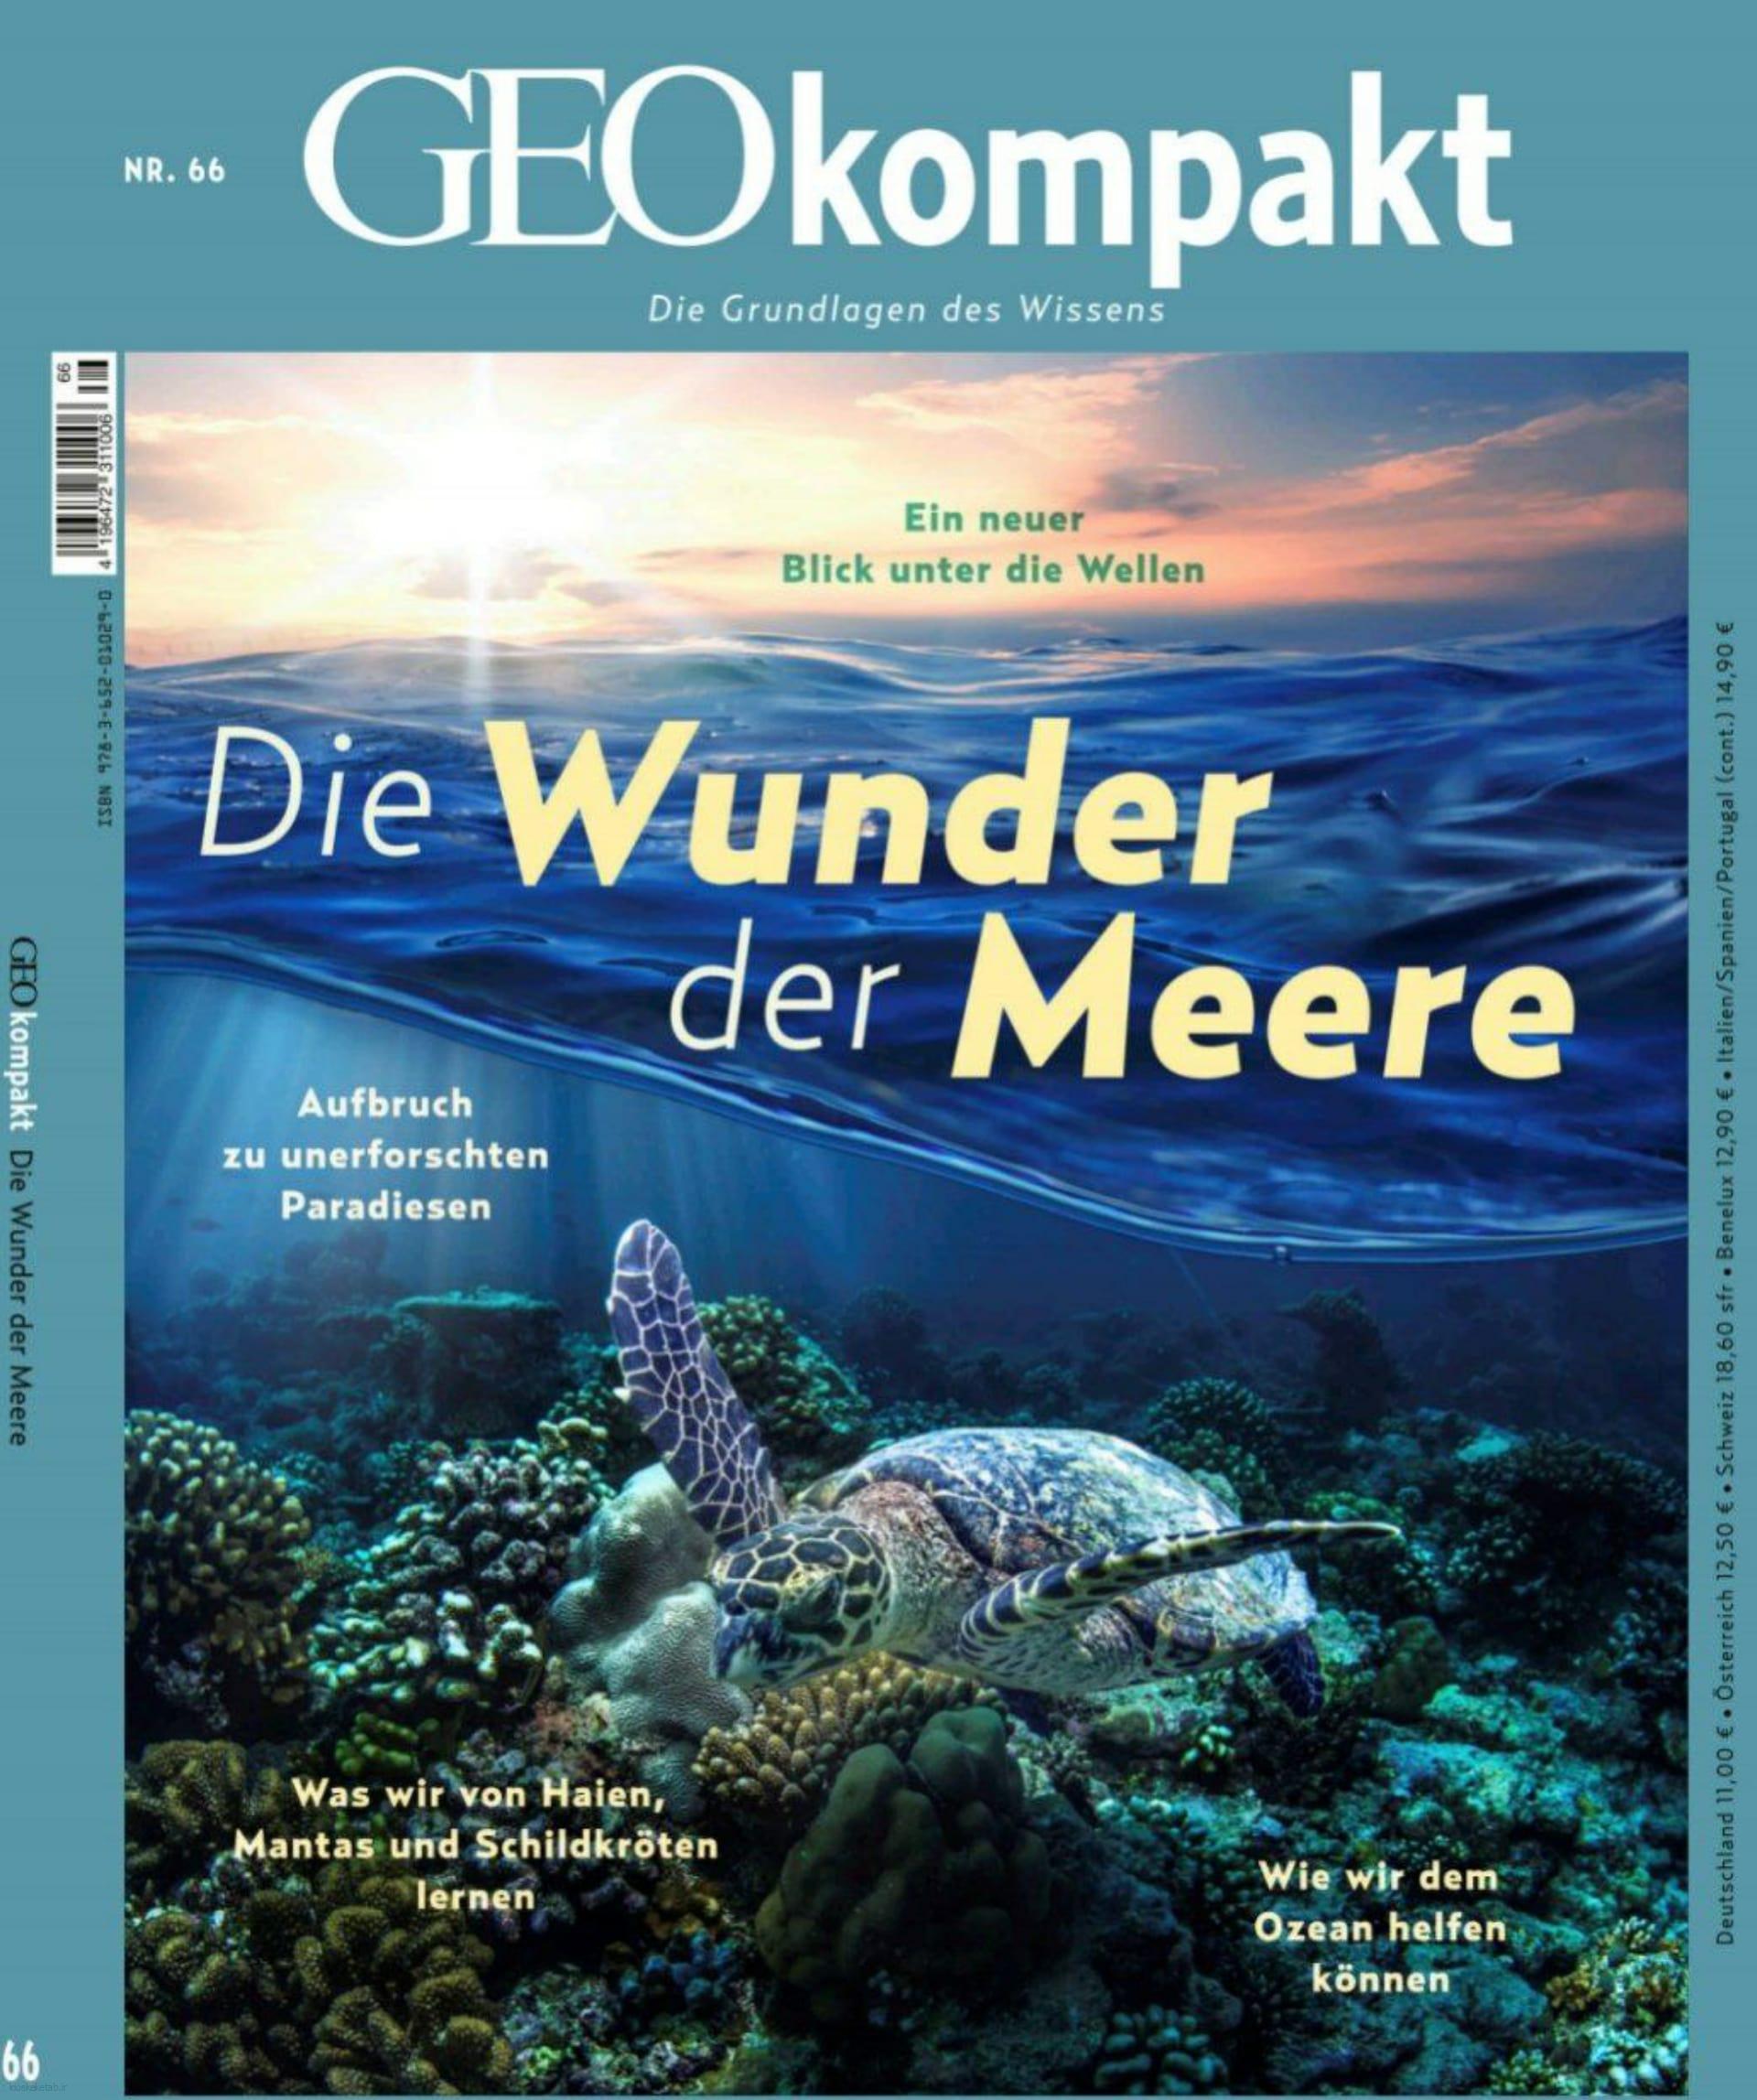 دانلود کتاب آلمانیgeo kompakt die wunder der meere